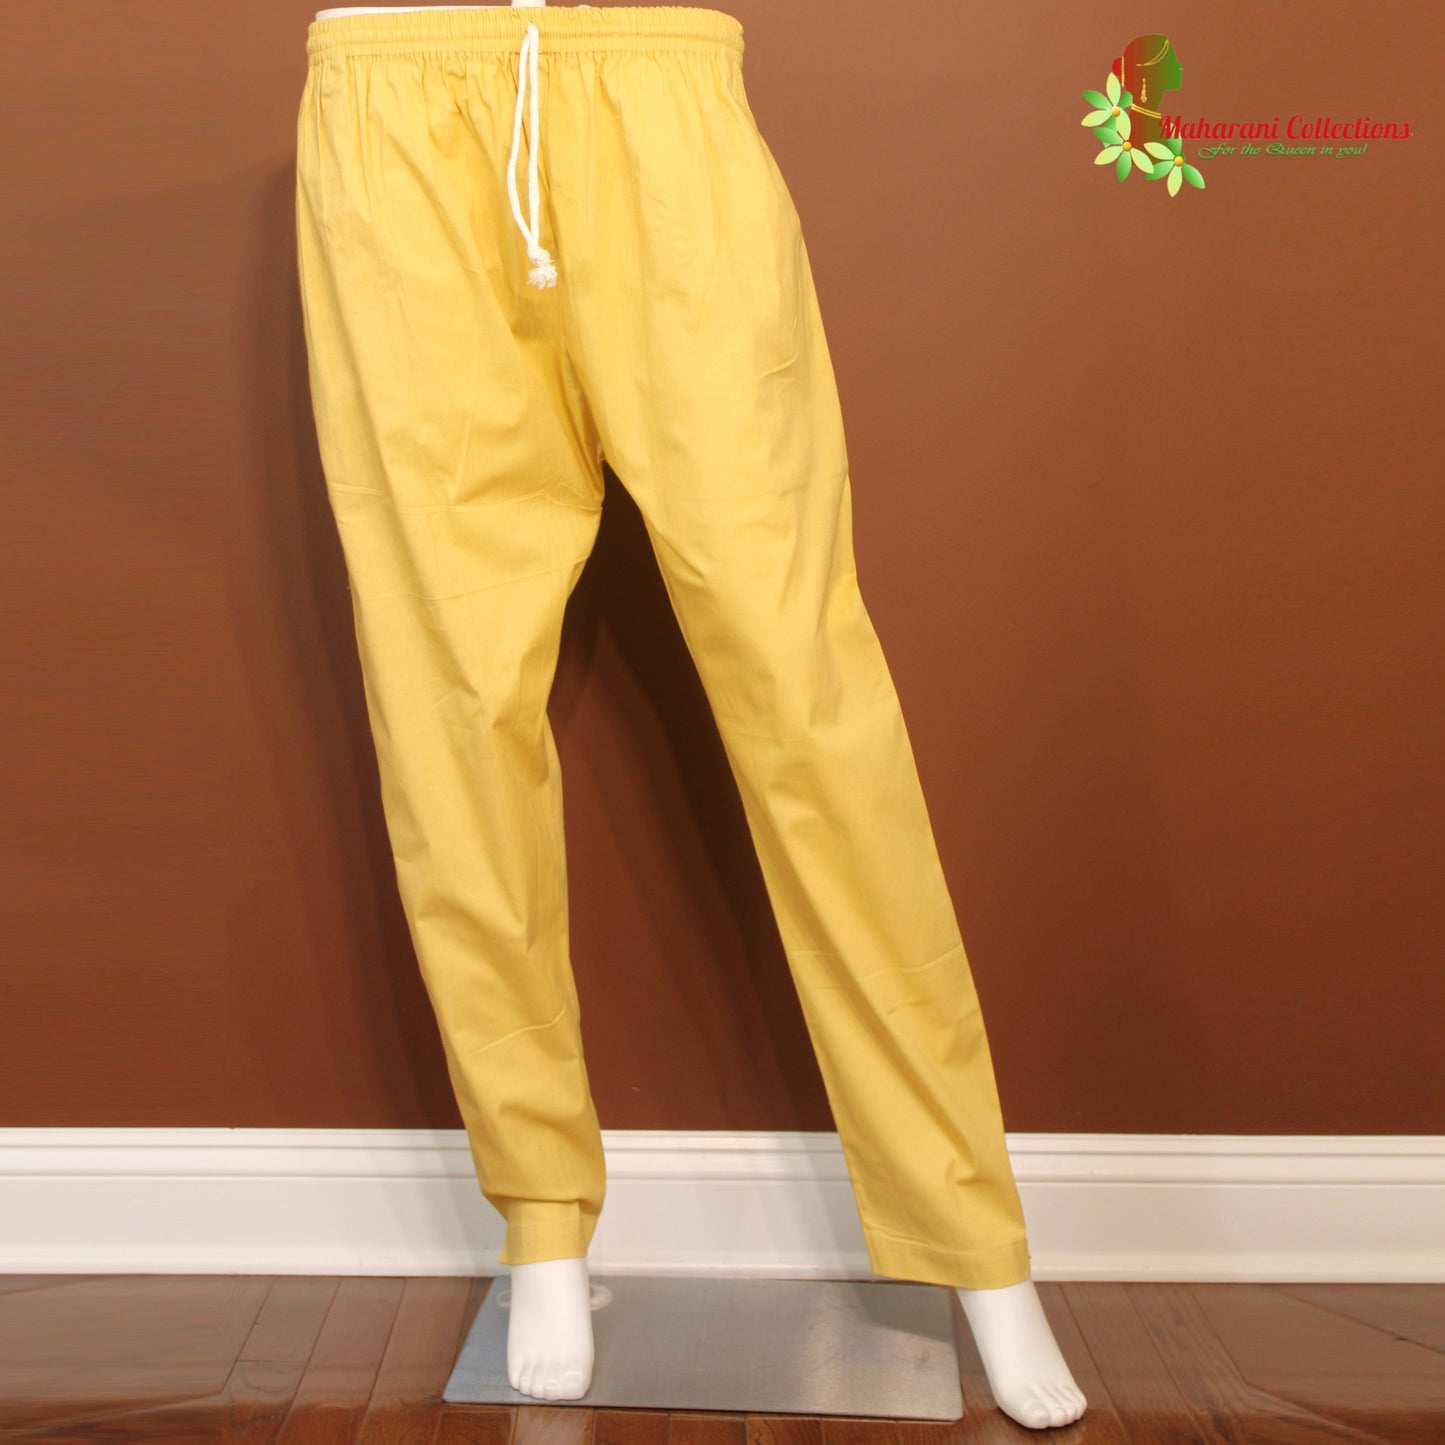 Maharani's Designer Silk Pant Suit - Green and Yellow (M)